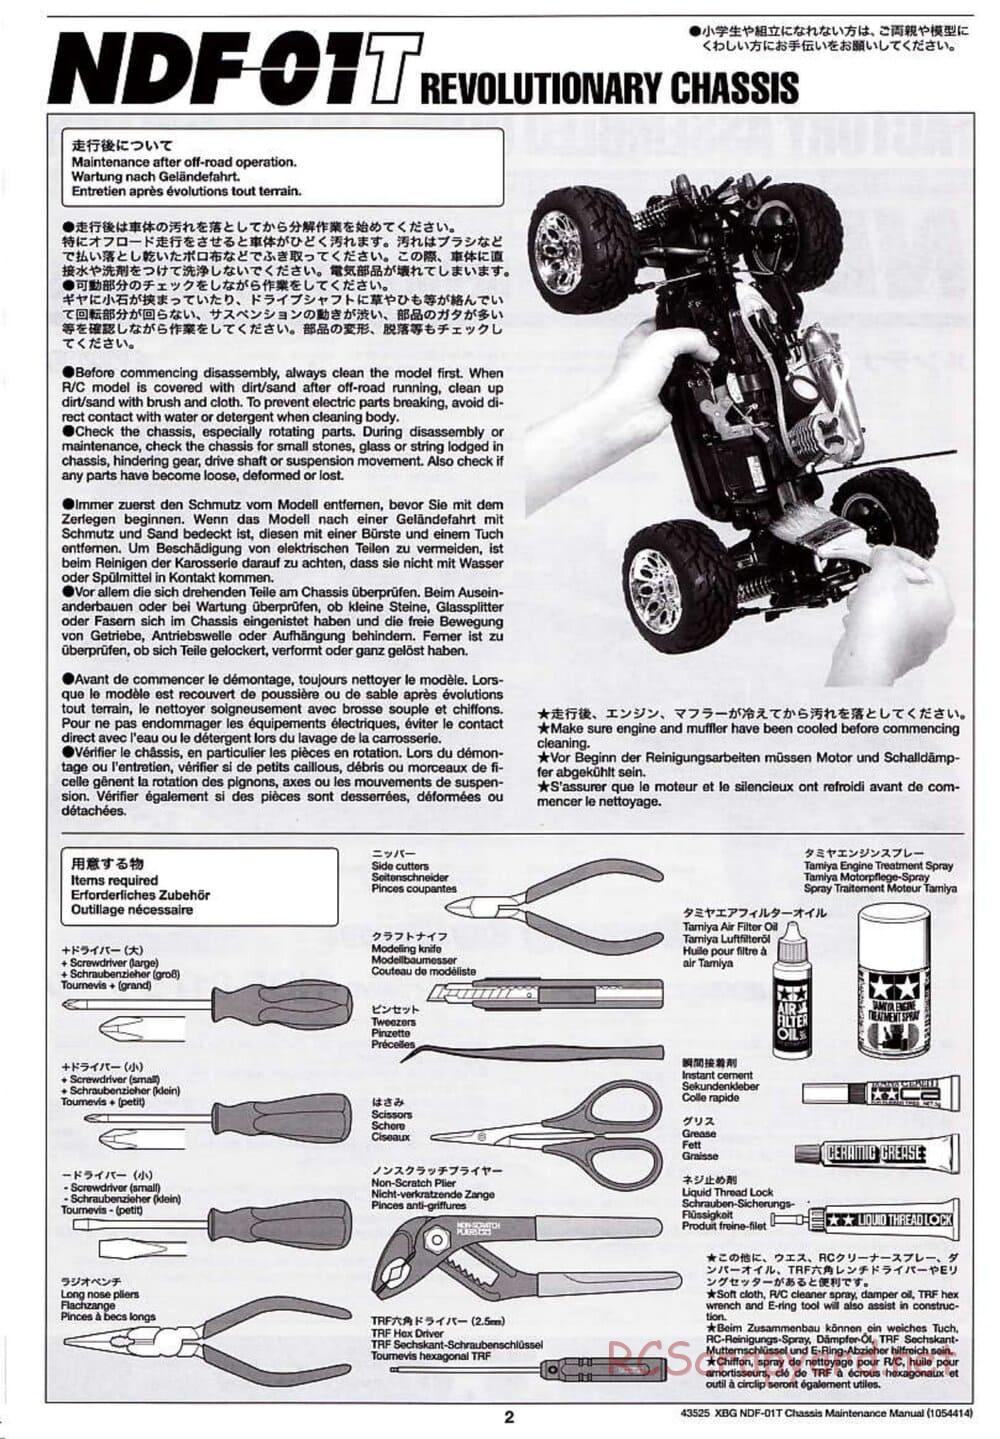 Tamiya - Nitro Crusher - NDF-01T - Maintenance Manual - Page 2